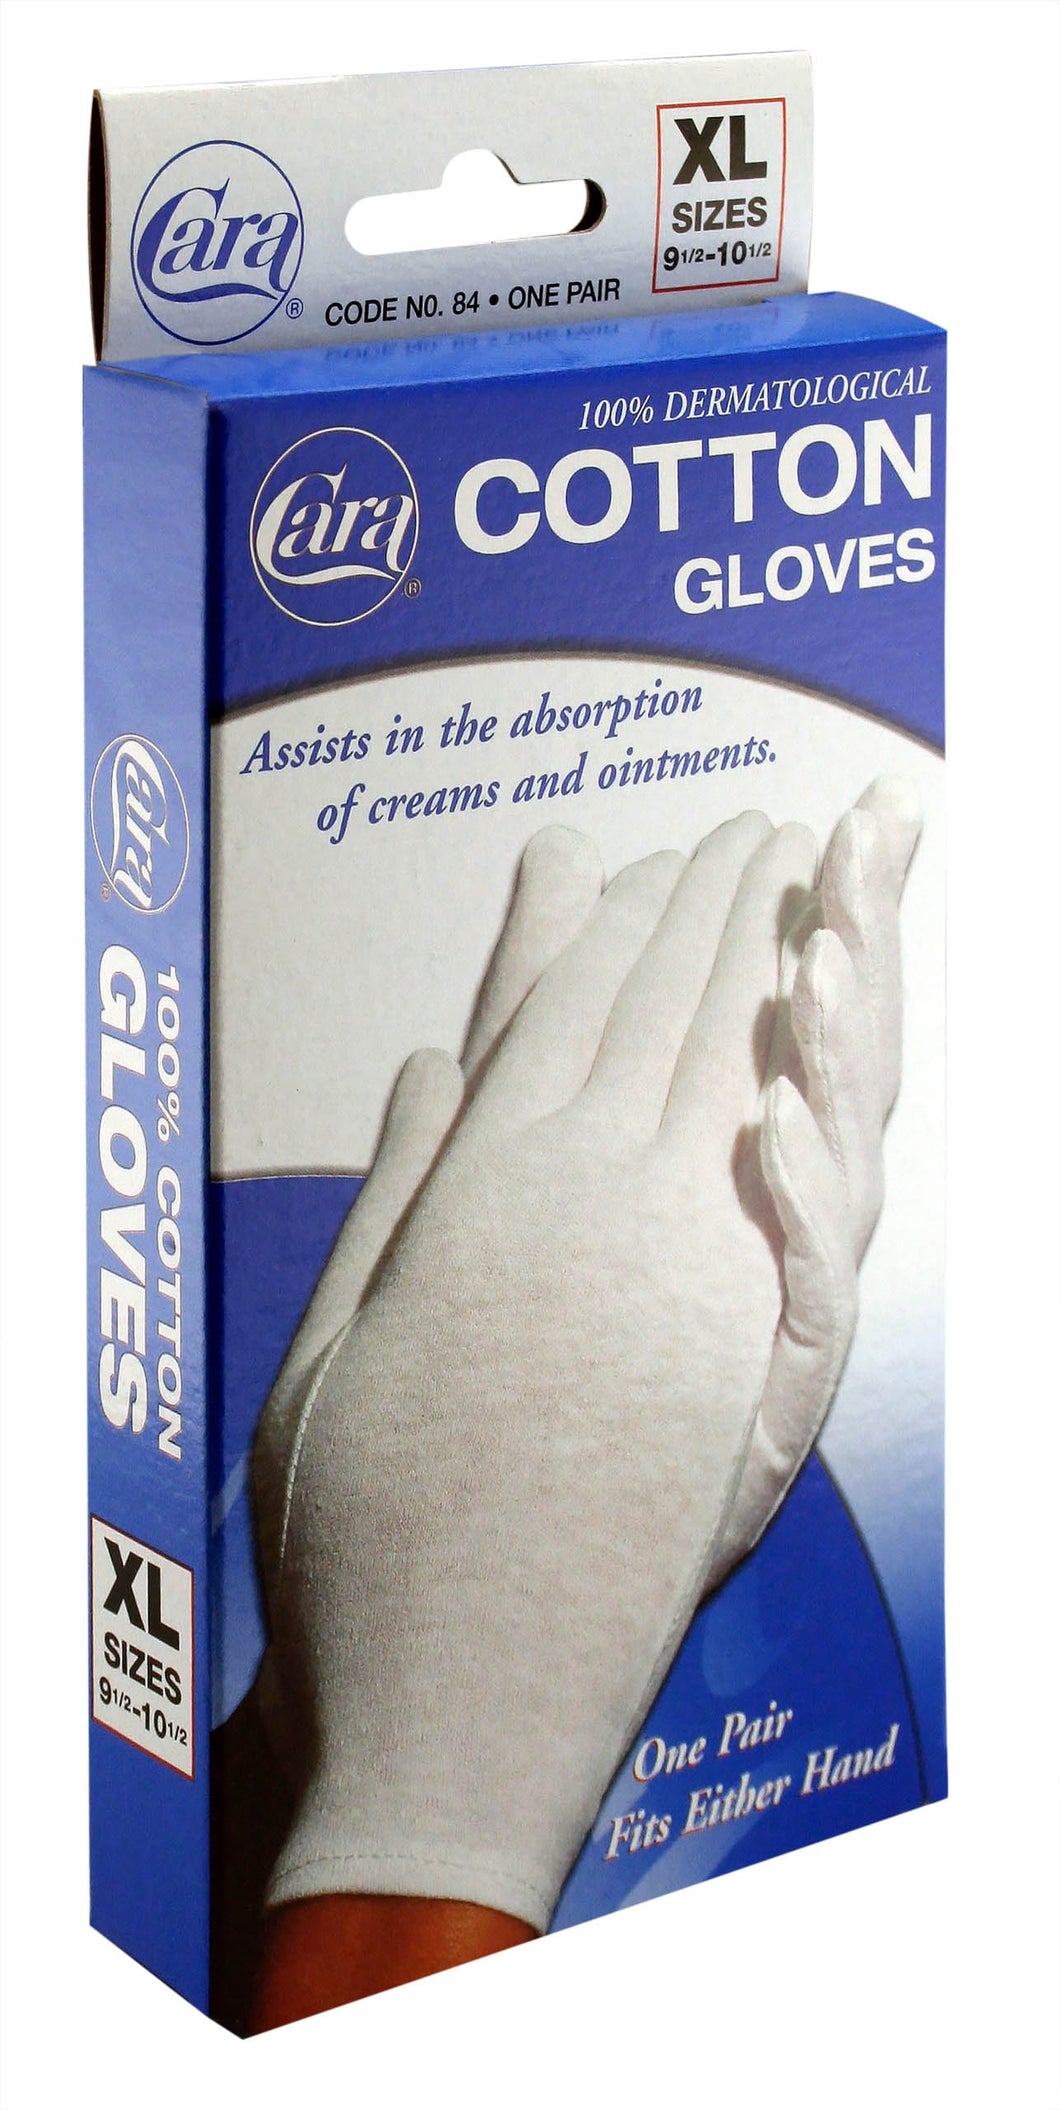 Model #84 - Dermatological Cotton Gloves, Extra Large